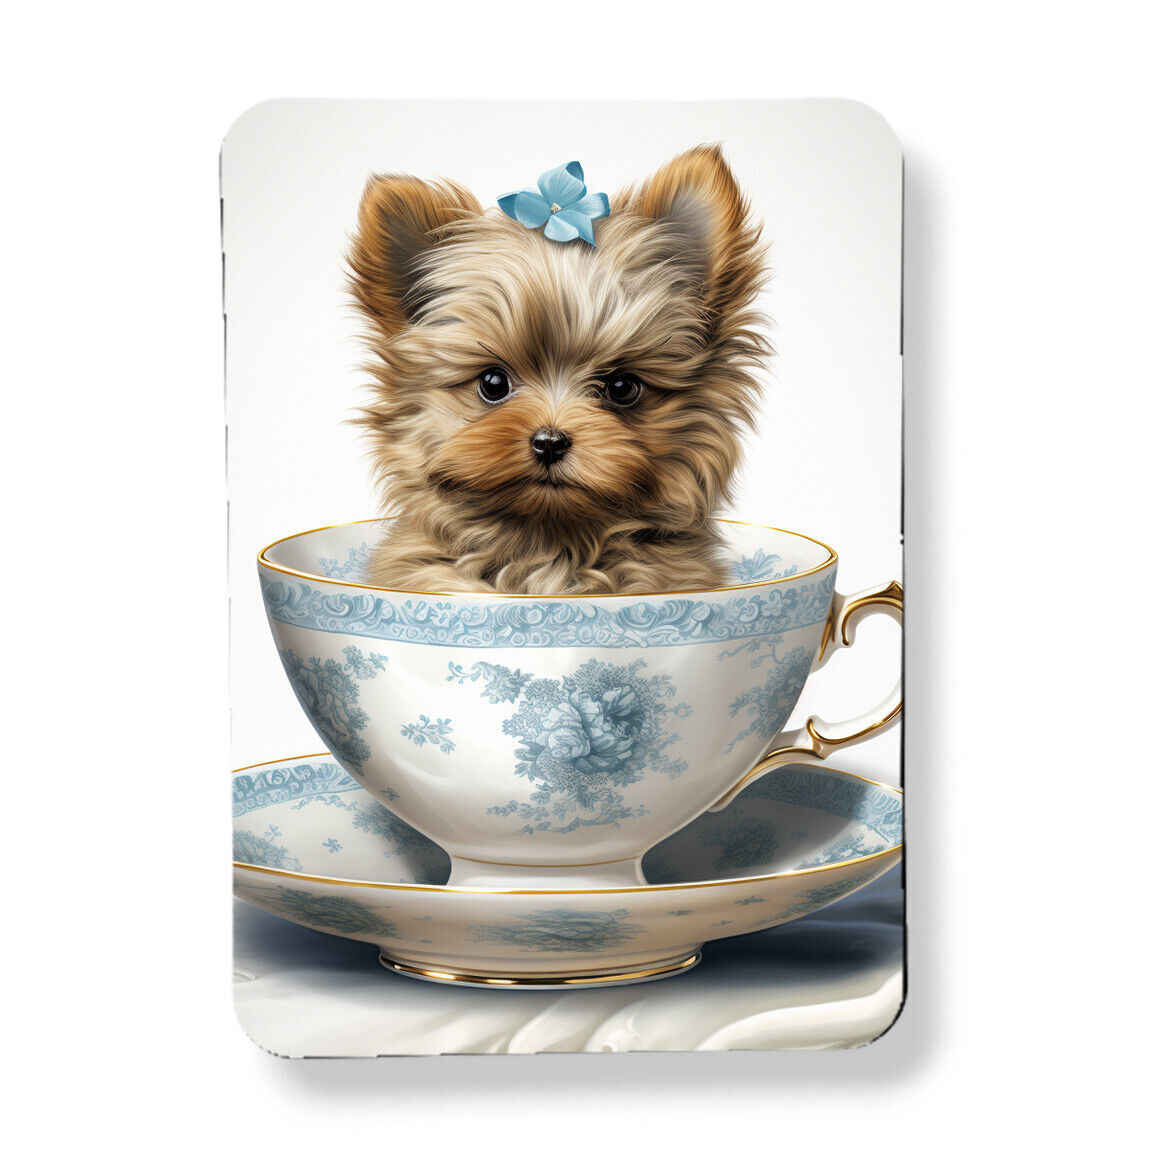 Teacup Yorkie Yorkshire Terrier Magnet Graphic Watercolor Art Yorkie Owner Gift